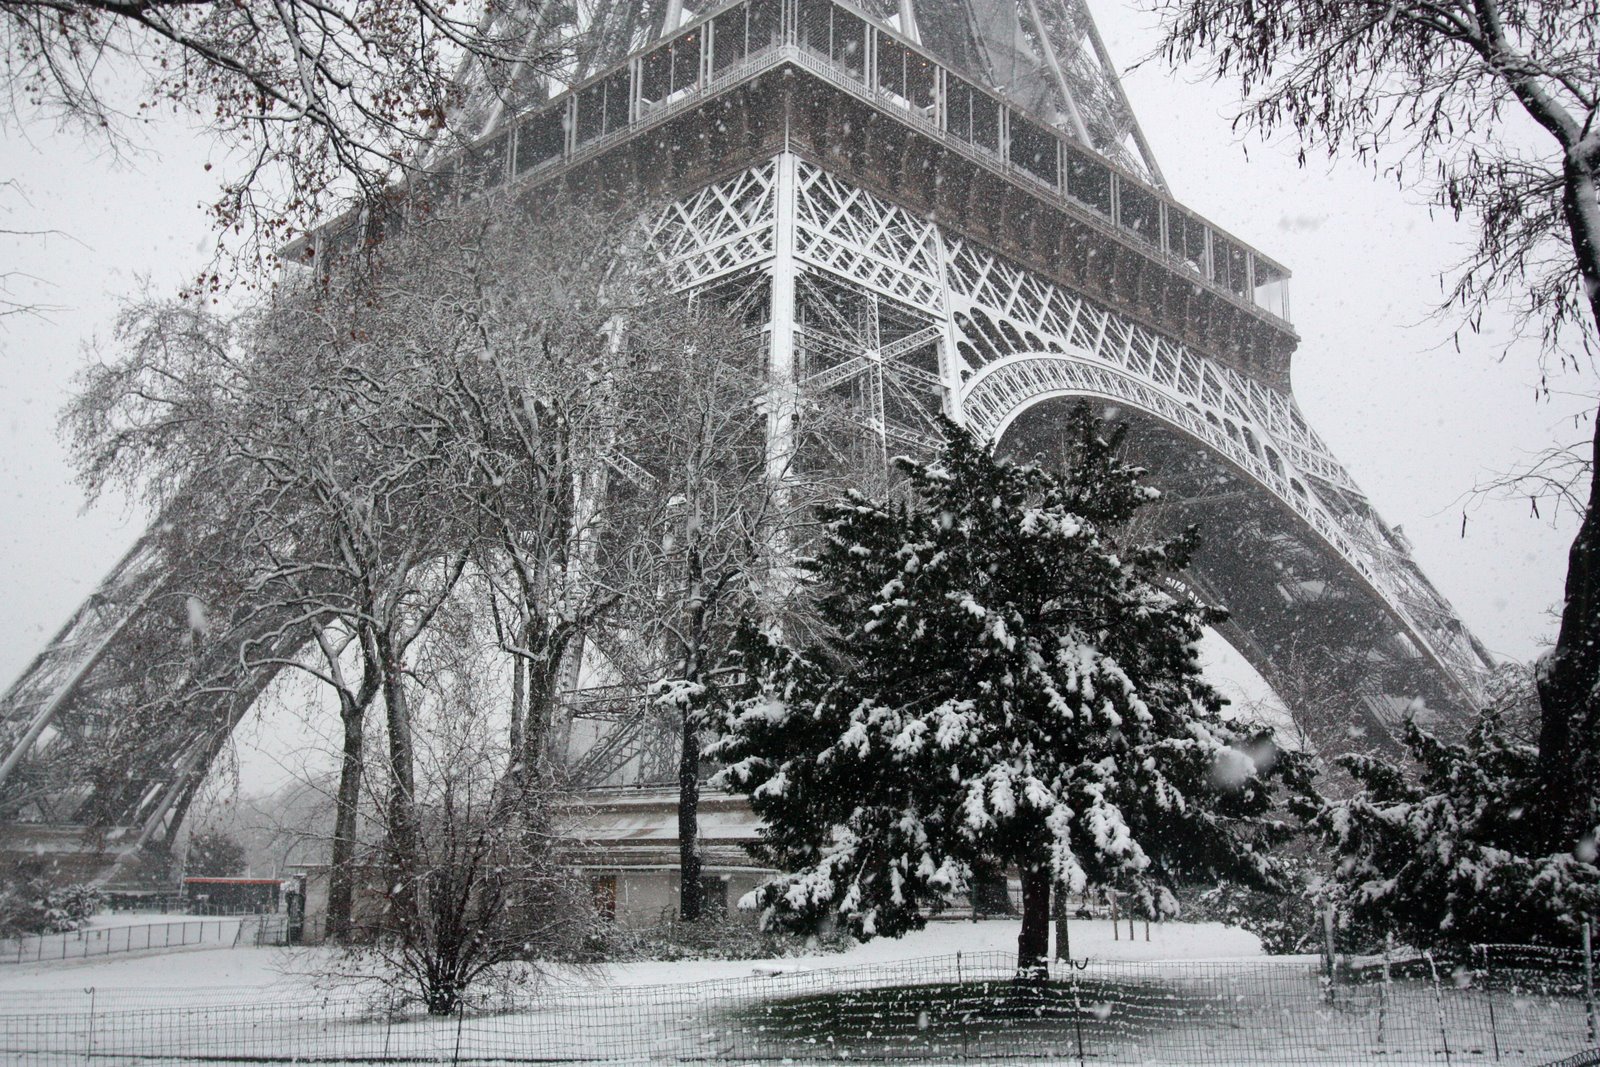 ParisDailyPhoto: Yes, snow again